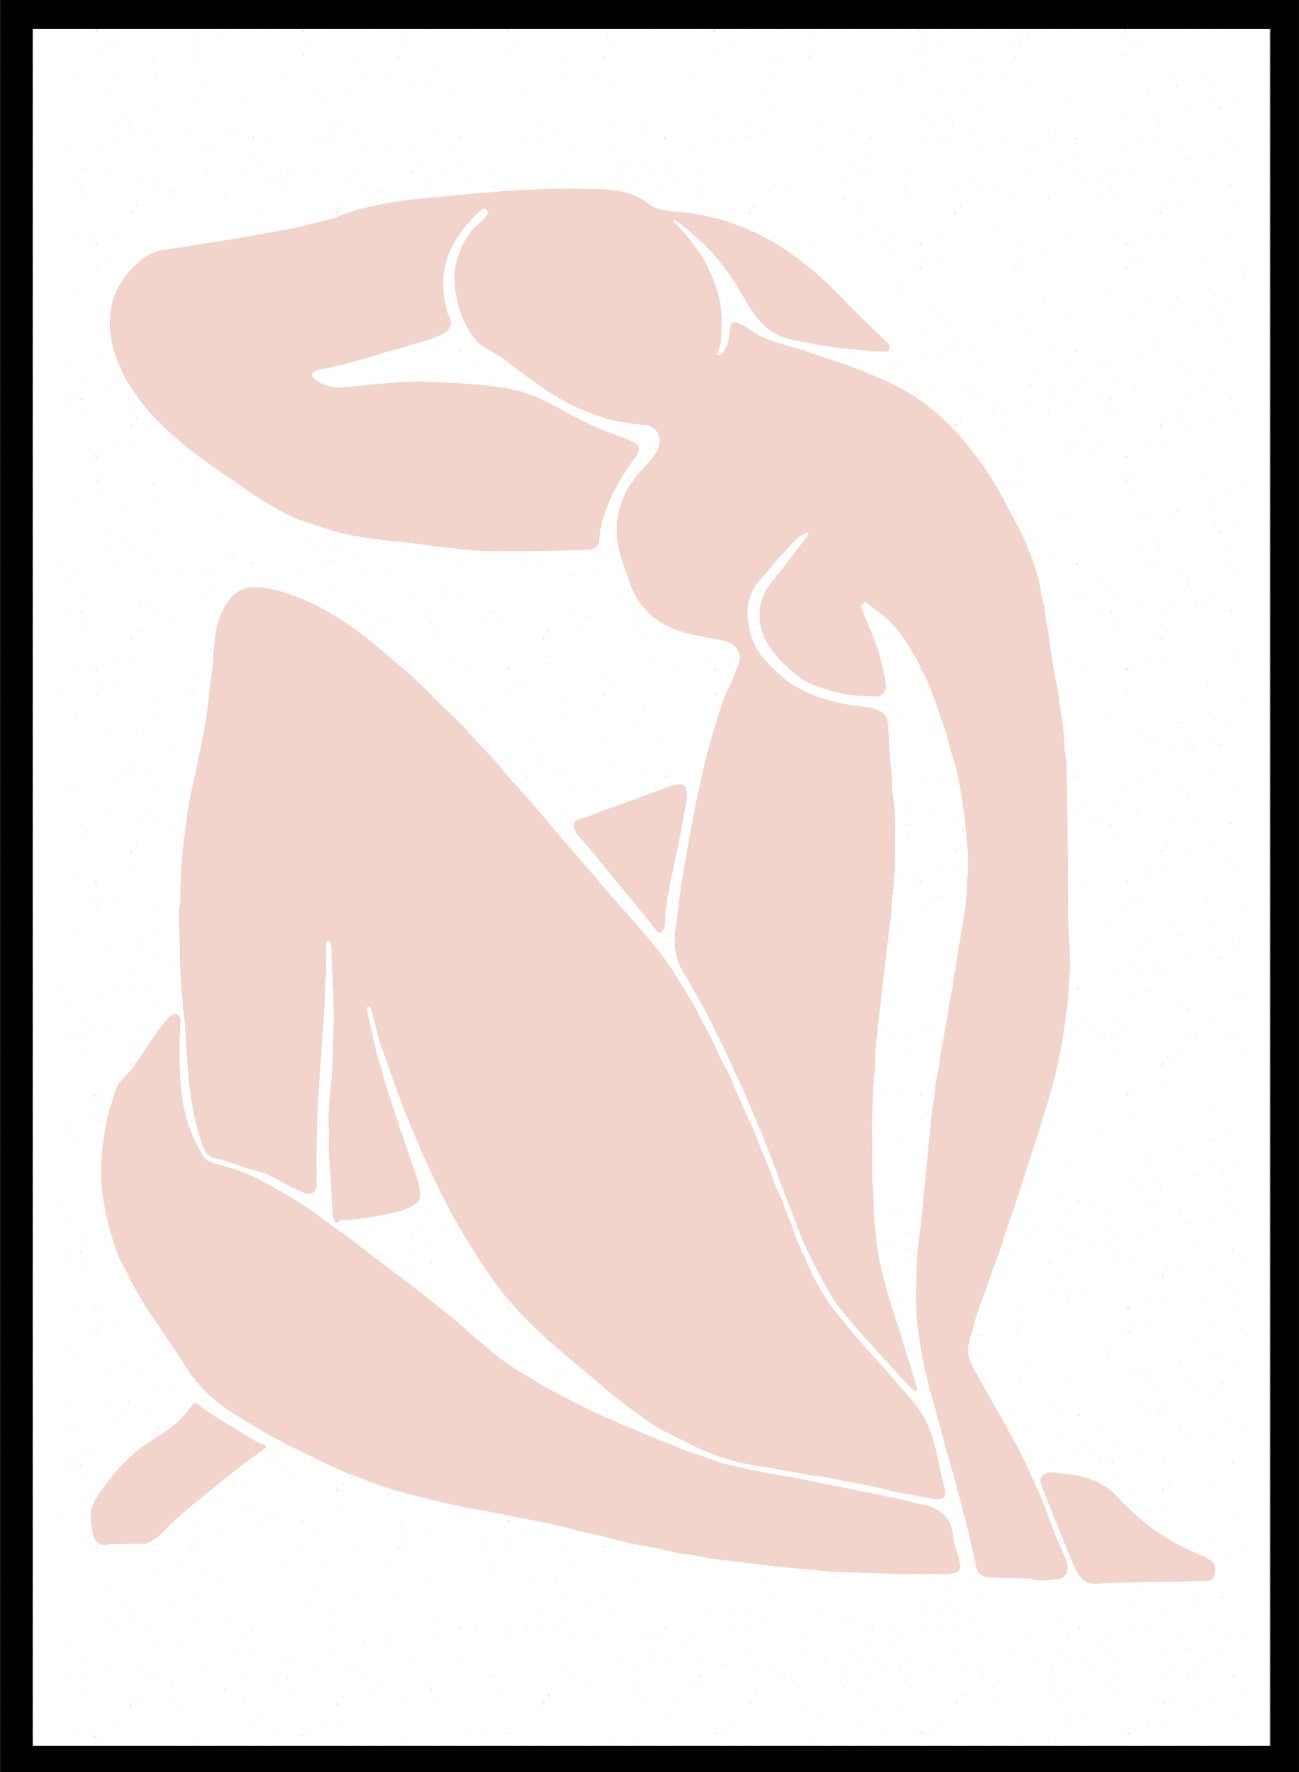 Henri Matisse Blue Nudes II, (reimagined in pink)